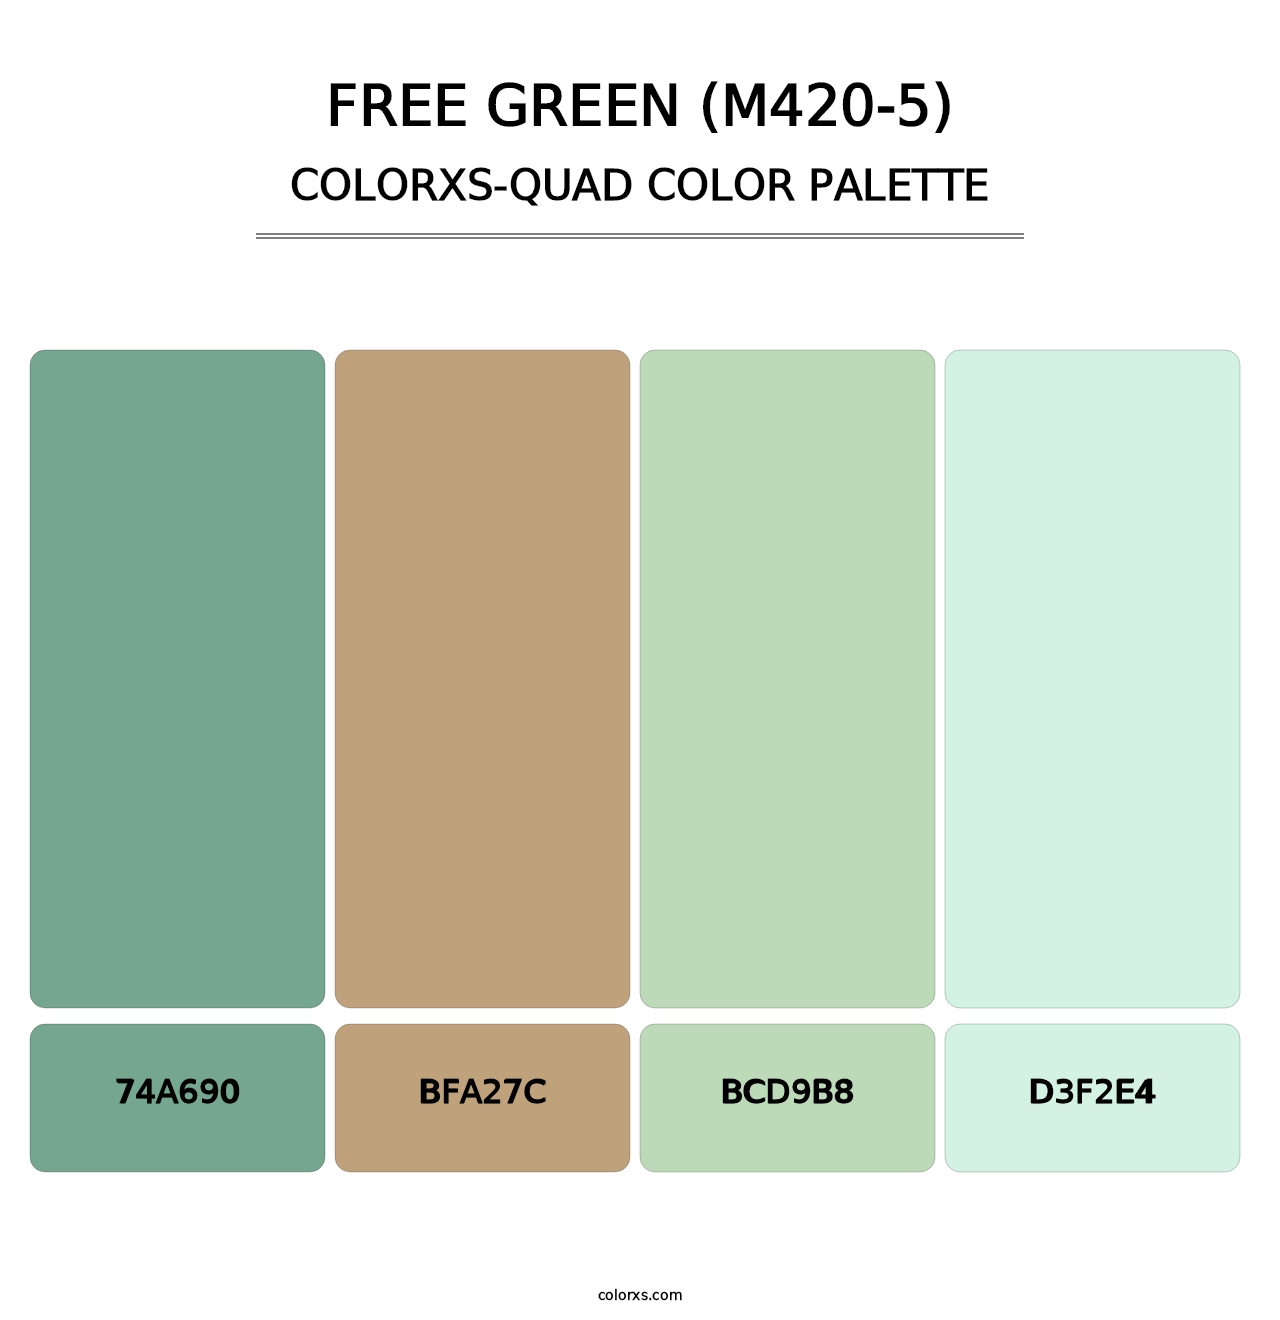 Free Green (M420-5) - Colorxs Quad Palette